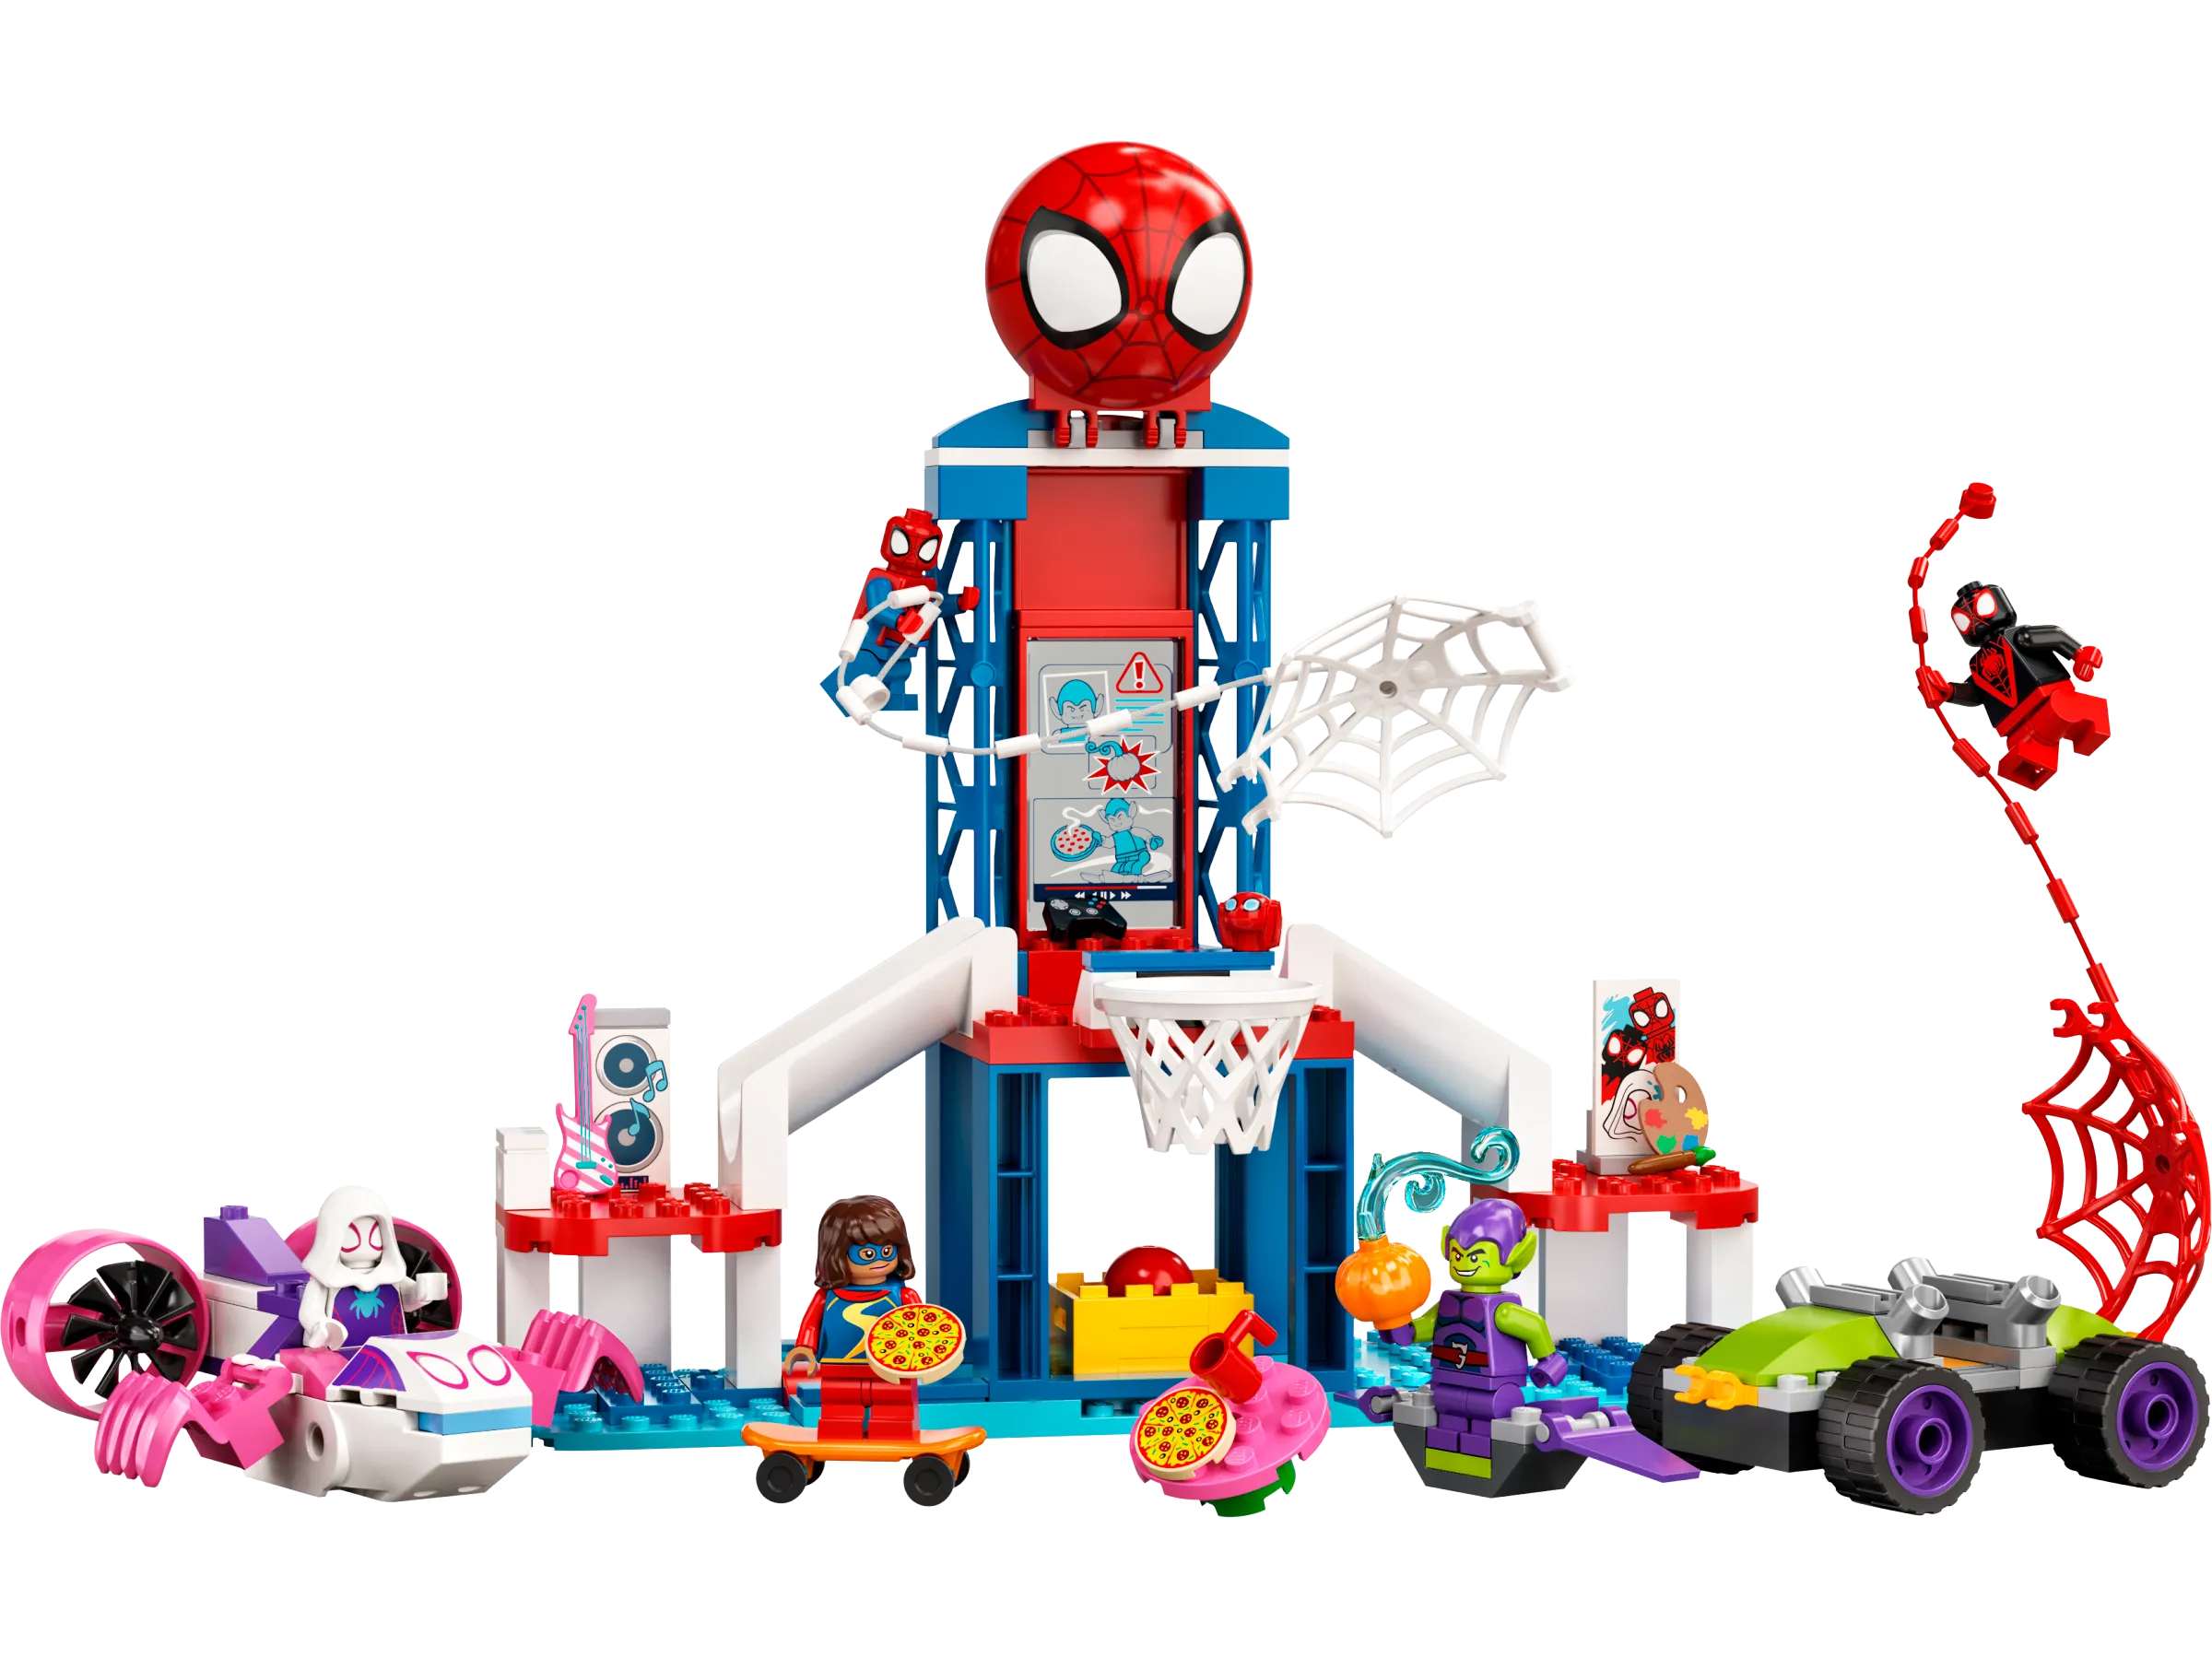 Lego Spider-Man In The Laboratory Of Doc Ock Marvel Multicolor